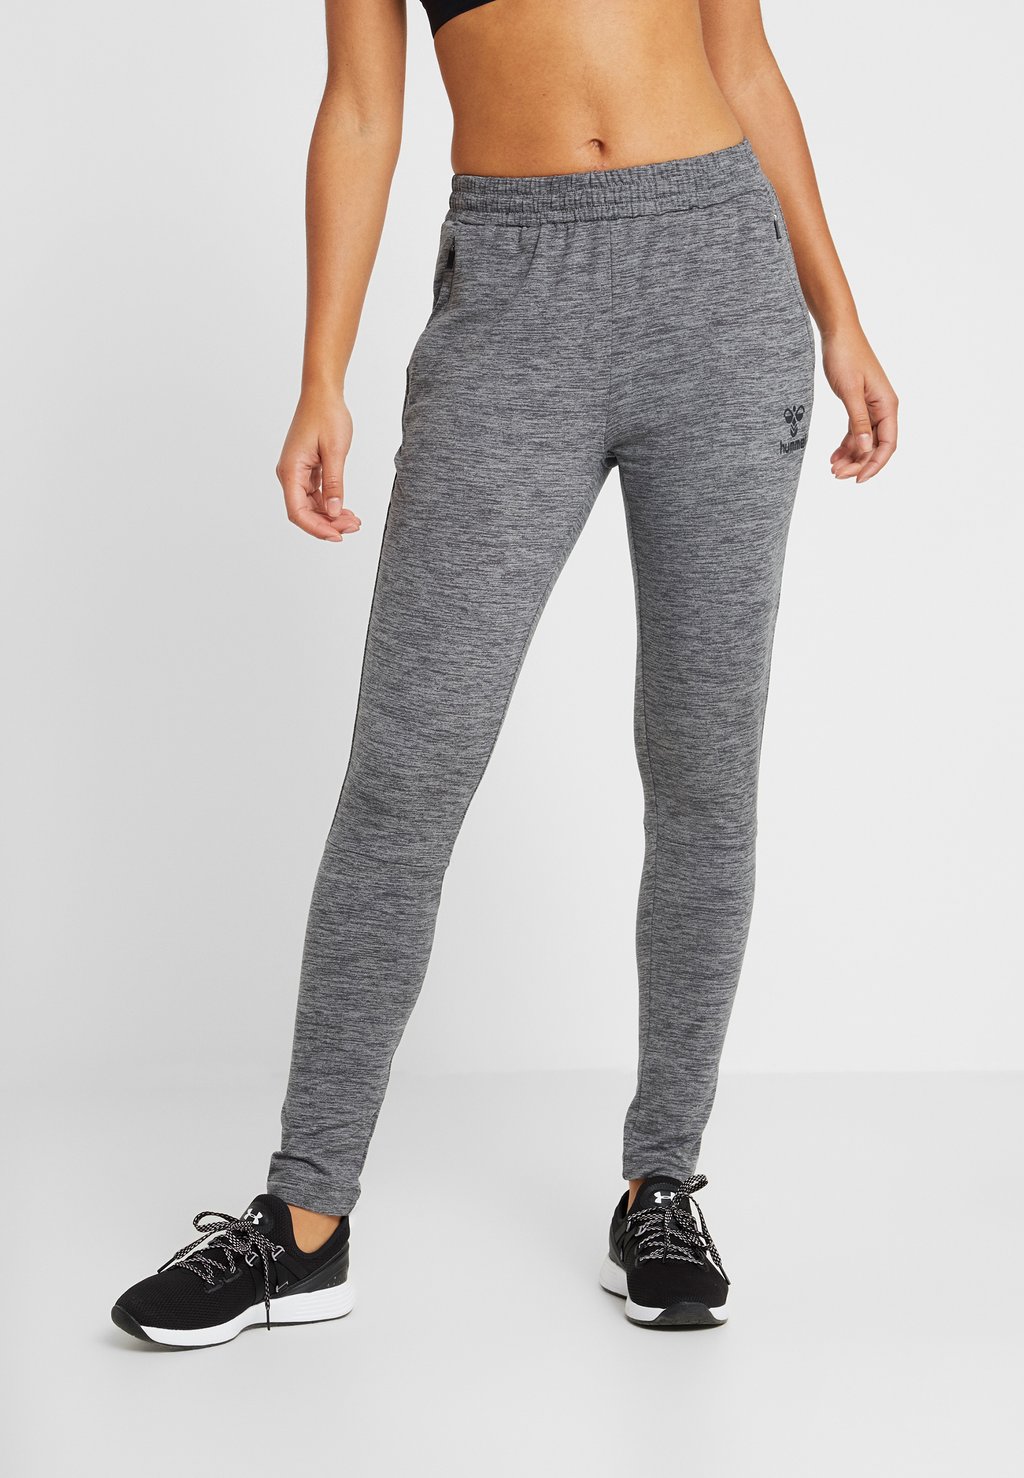 Спортивные брюки Hummel, темно-серый меланж спортивные брюки kappa серый меланж